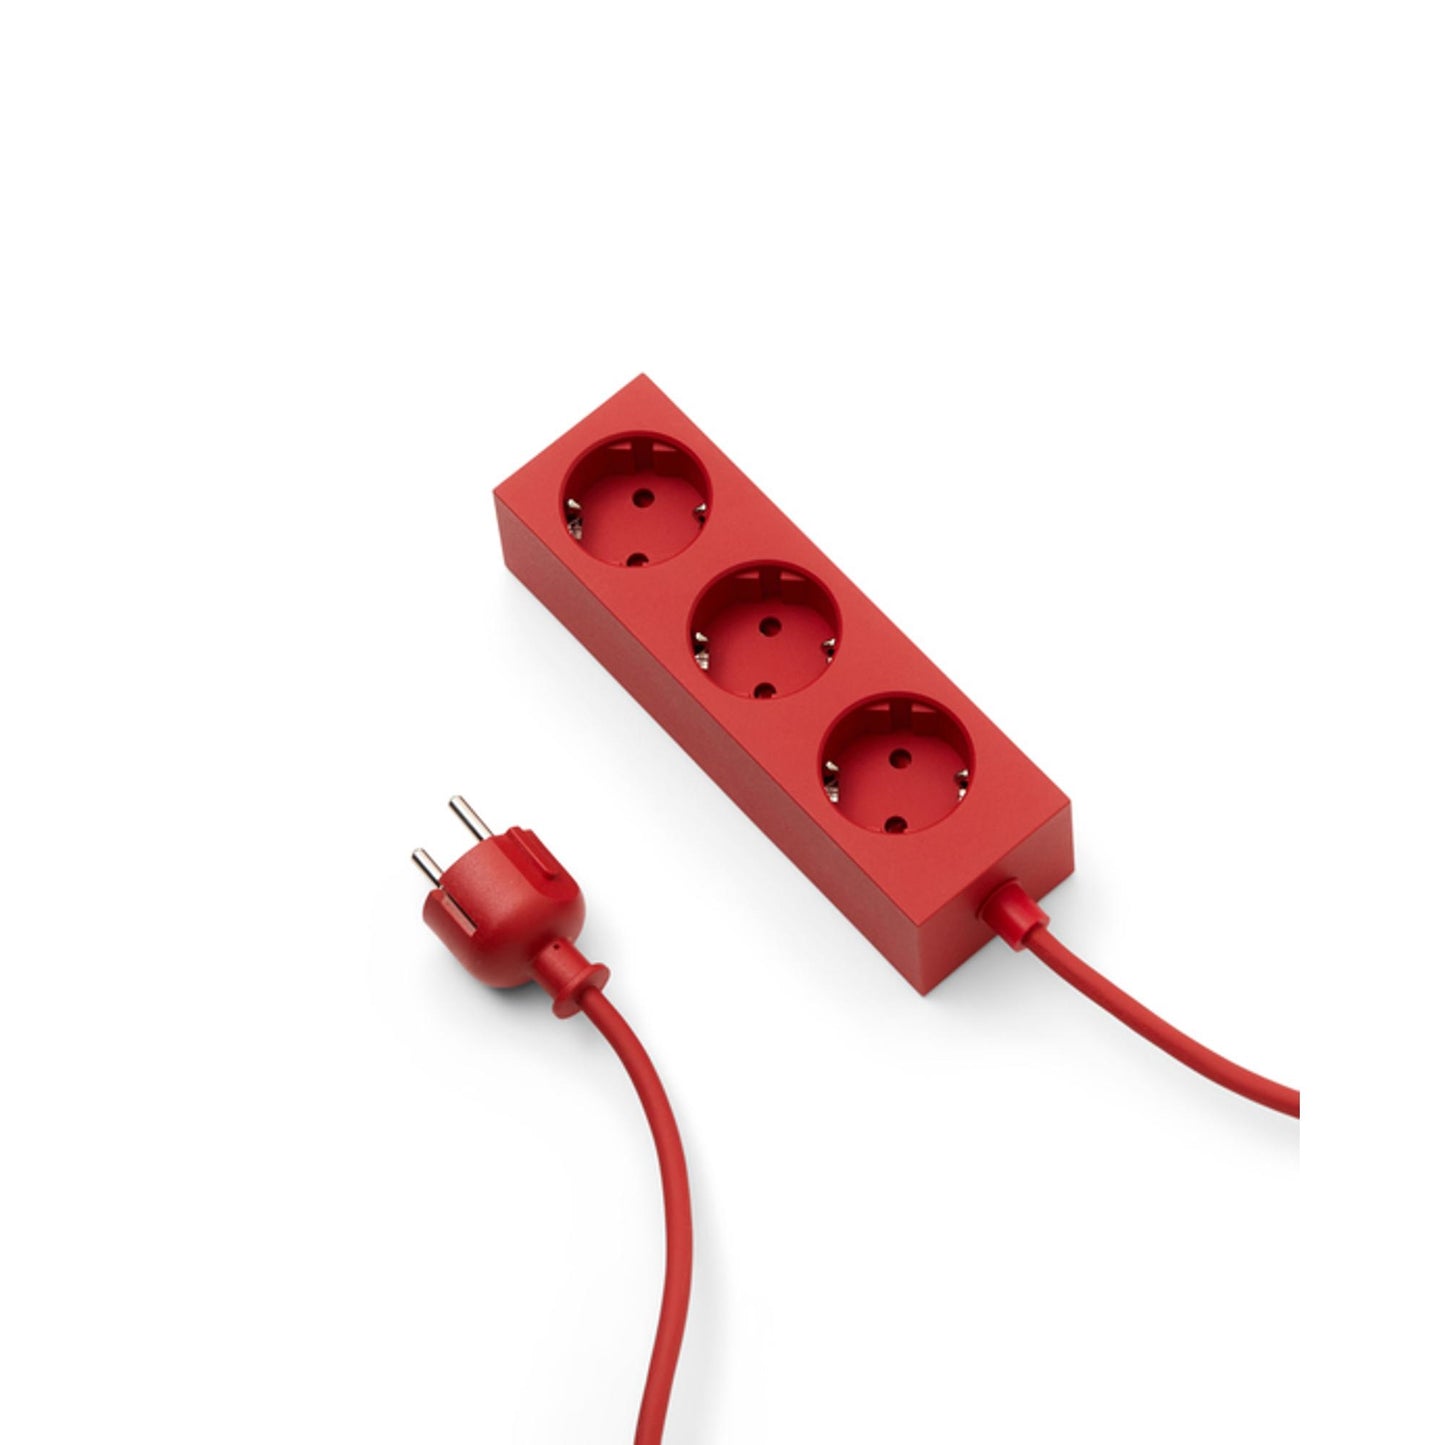 Power Bar Socket 500 cm by Pedestal #Four Red